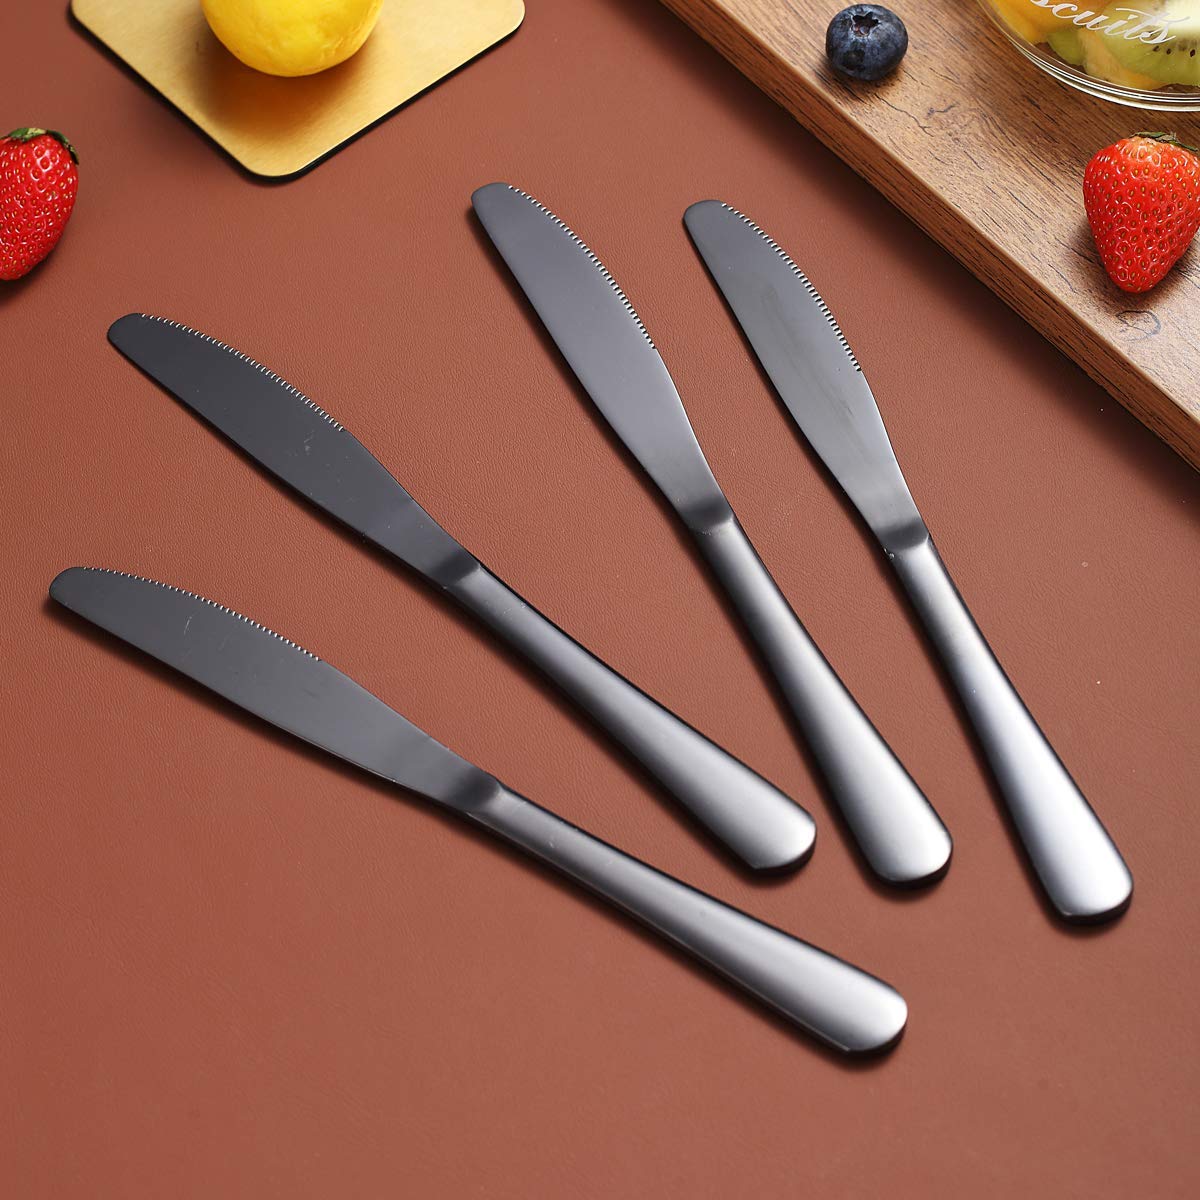 Berglander Black Dinner Knives Set Of 4, Stainless Steel Titanium Plating Shiny Black Dinner Knife, Butter Knife Spreader Table Knives Sturdy And Dishwasher Safe